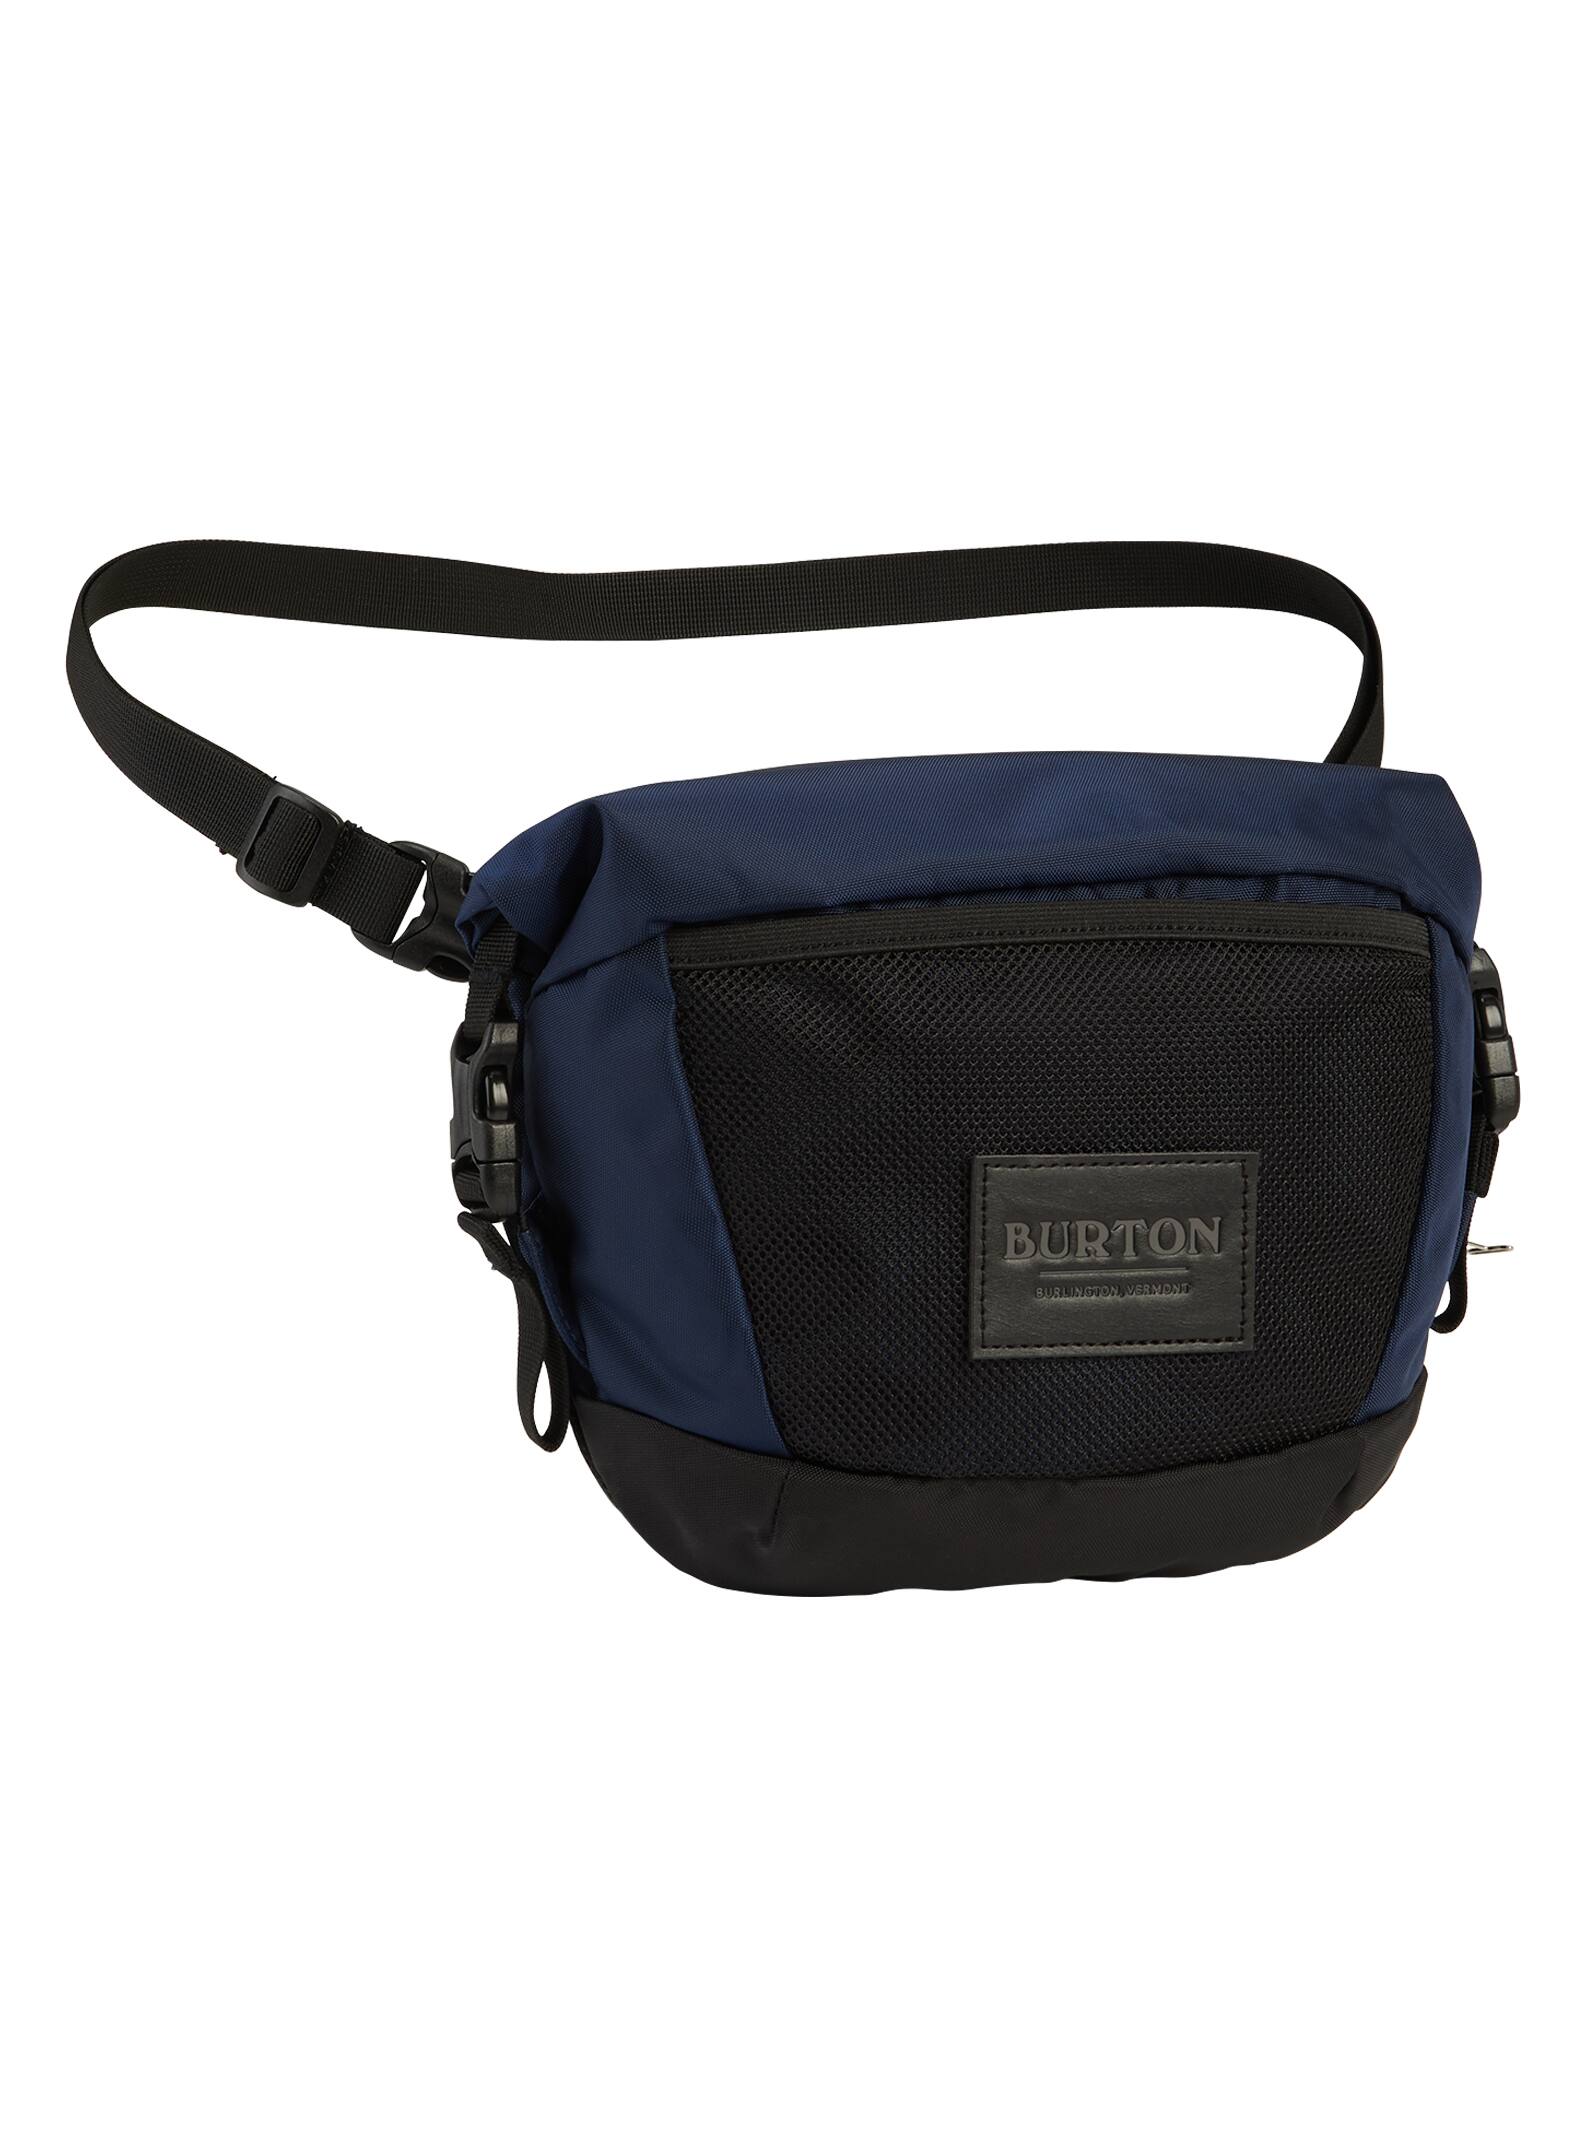 Burton 5L Small Haversack Bag | Burton.com Spring 2021 US